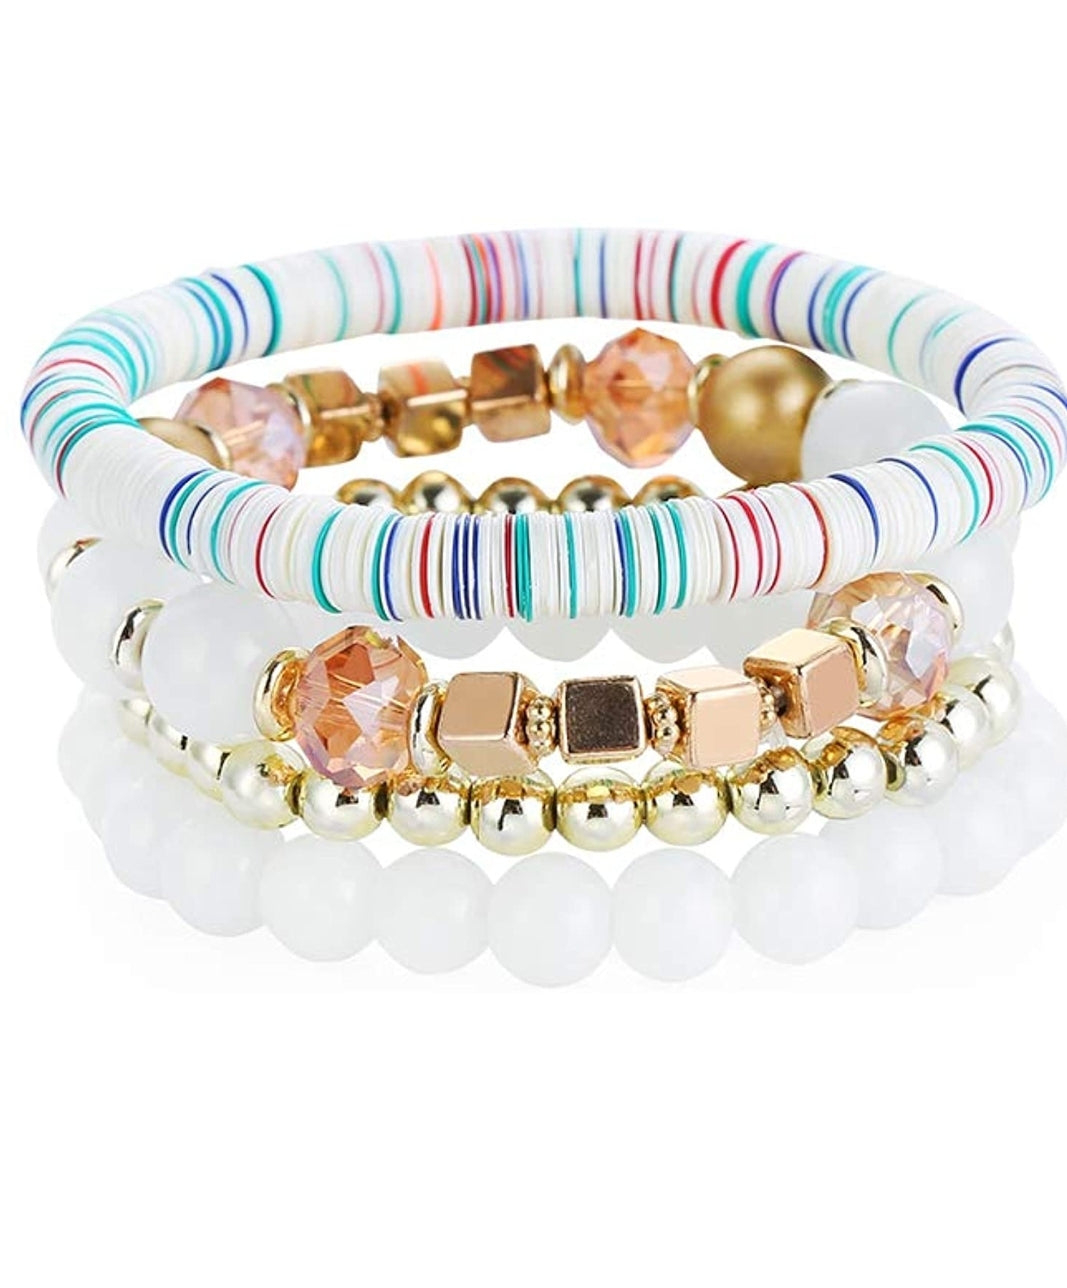 Rubber Band Bracelet Set - Her Jewel•ry Box